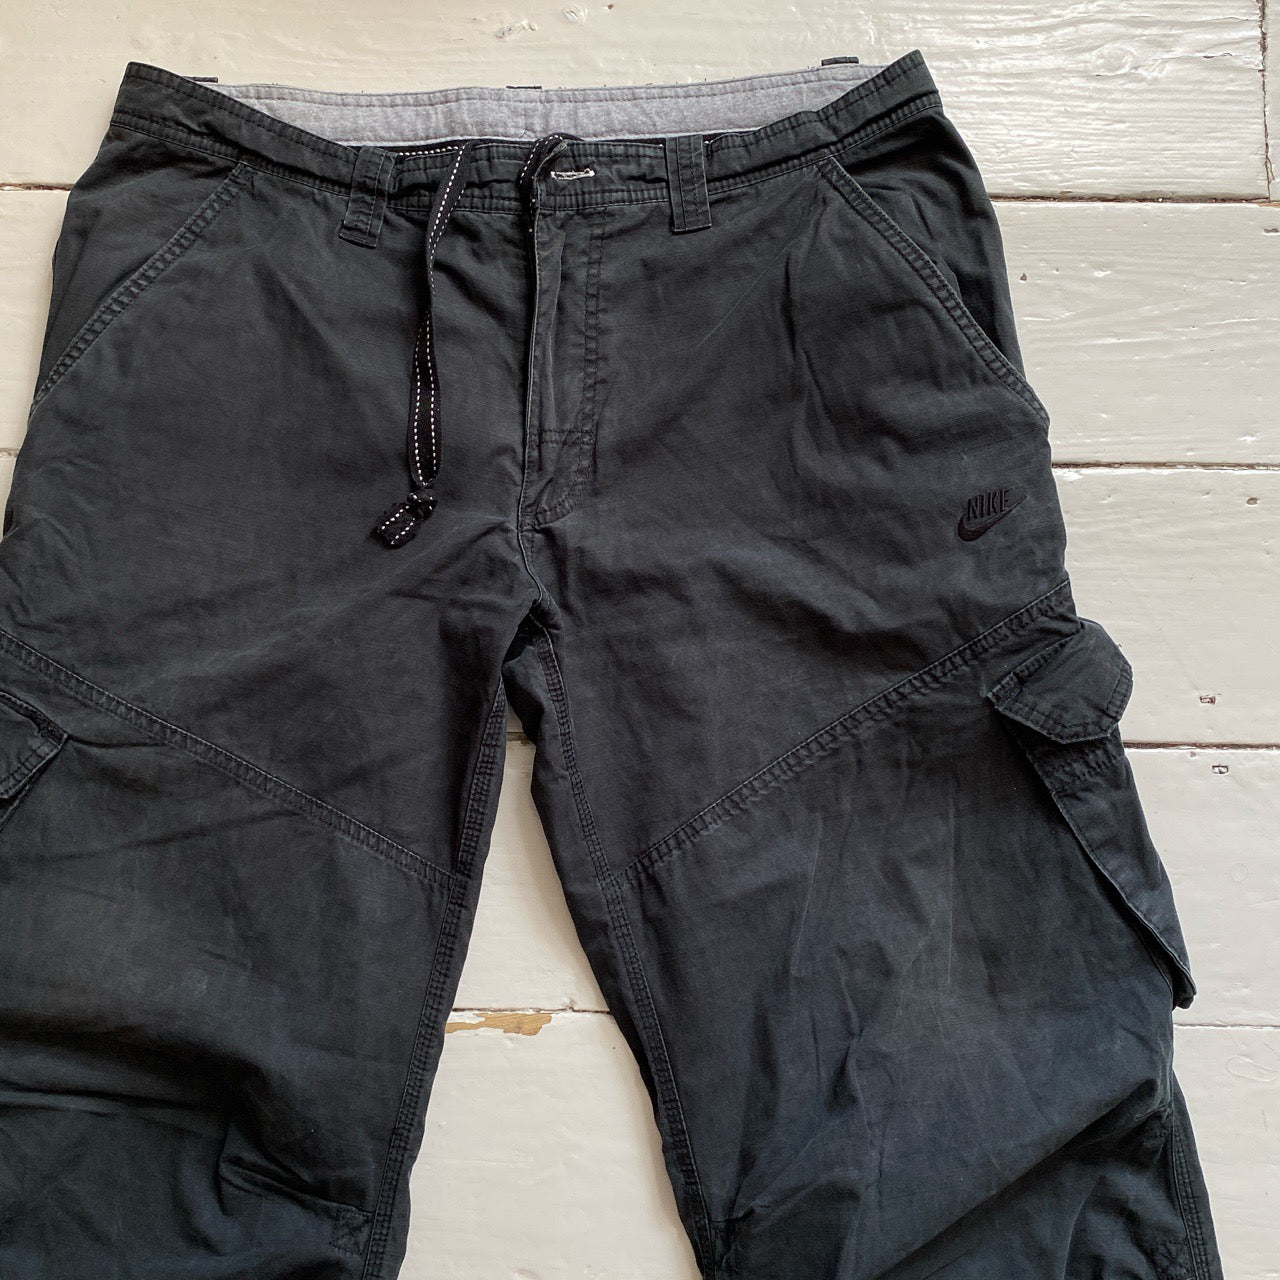 Nike Charcoal Black Cargo Trousers (W36L29)